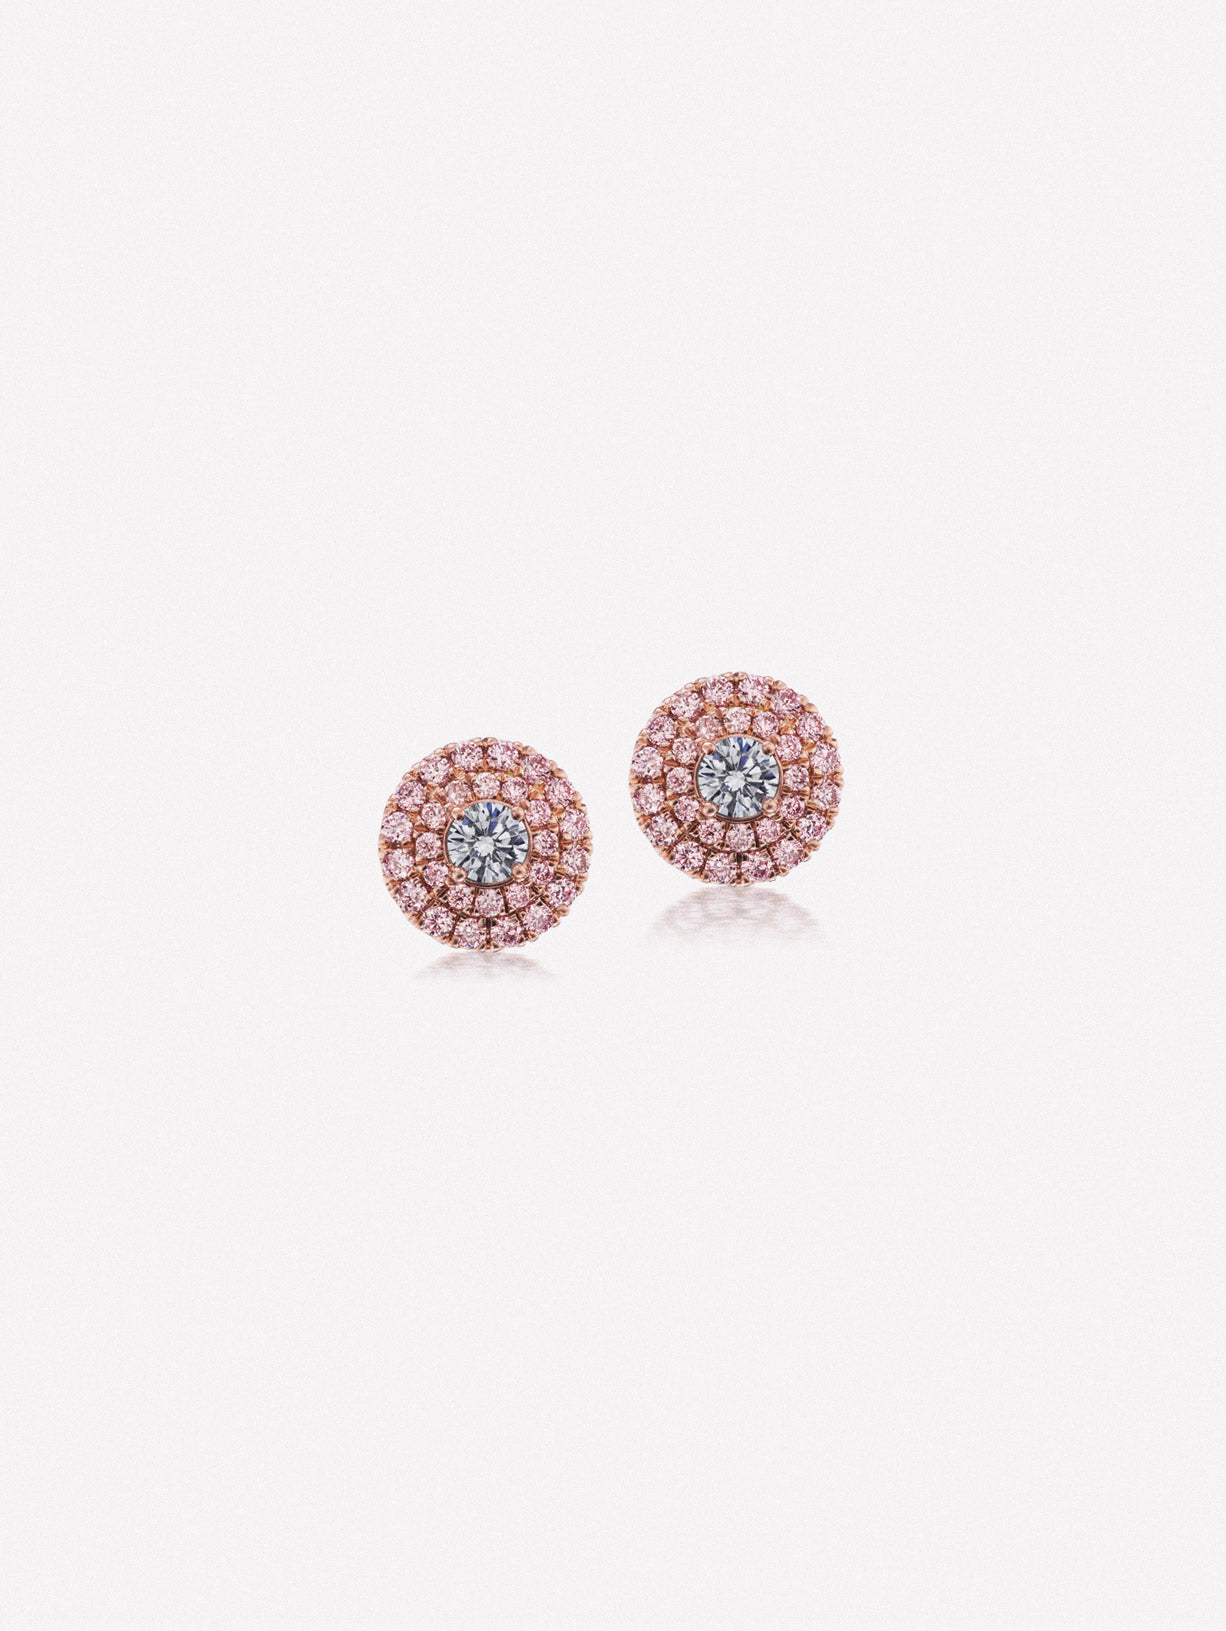 Argyle Blue Diamond and Argyle Pink™ Diamond Double Halo Stud Earrings - Pink Diamonds, J FINE - J Fine, Earrings - Pink Diamond Jewelry, argyle-blue-diamond-and-argyle-pink™-diamond-doub